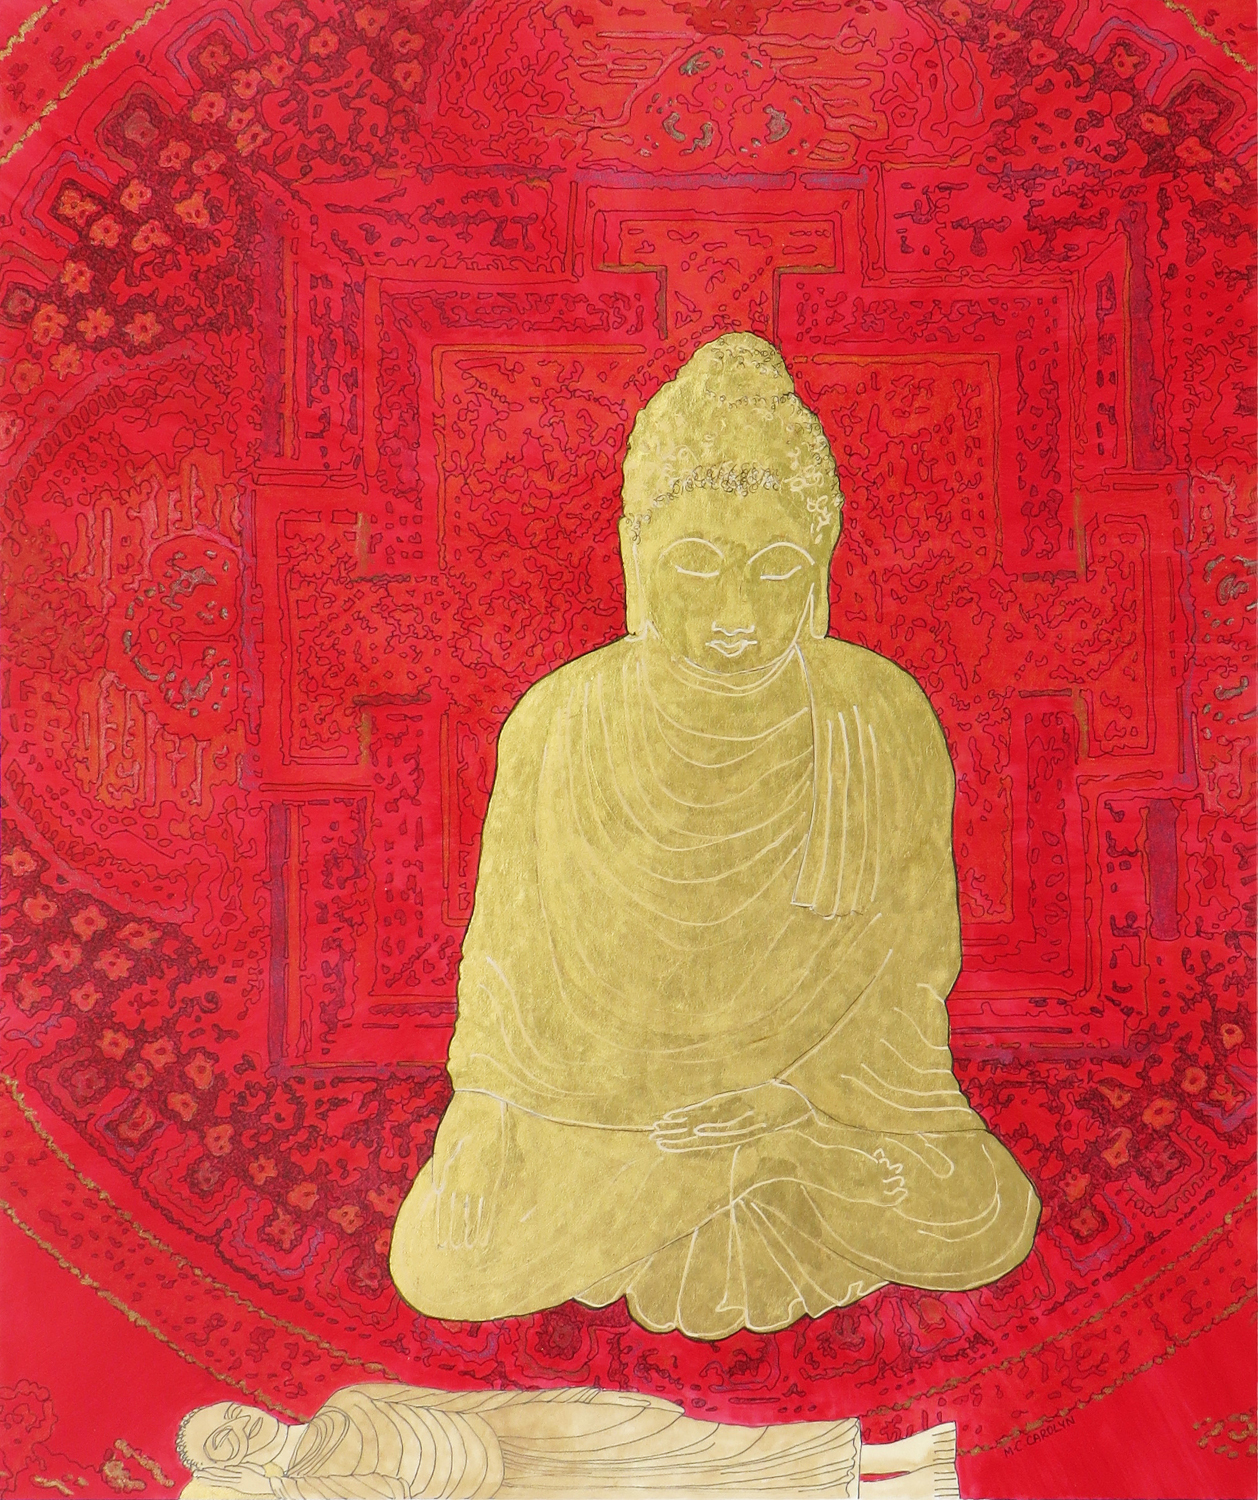 "The Buddha"